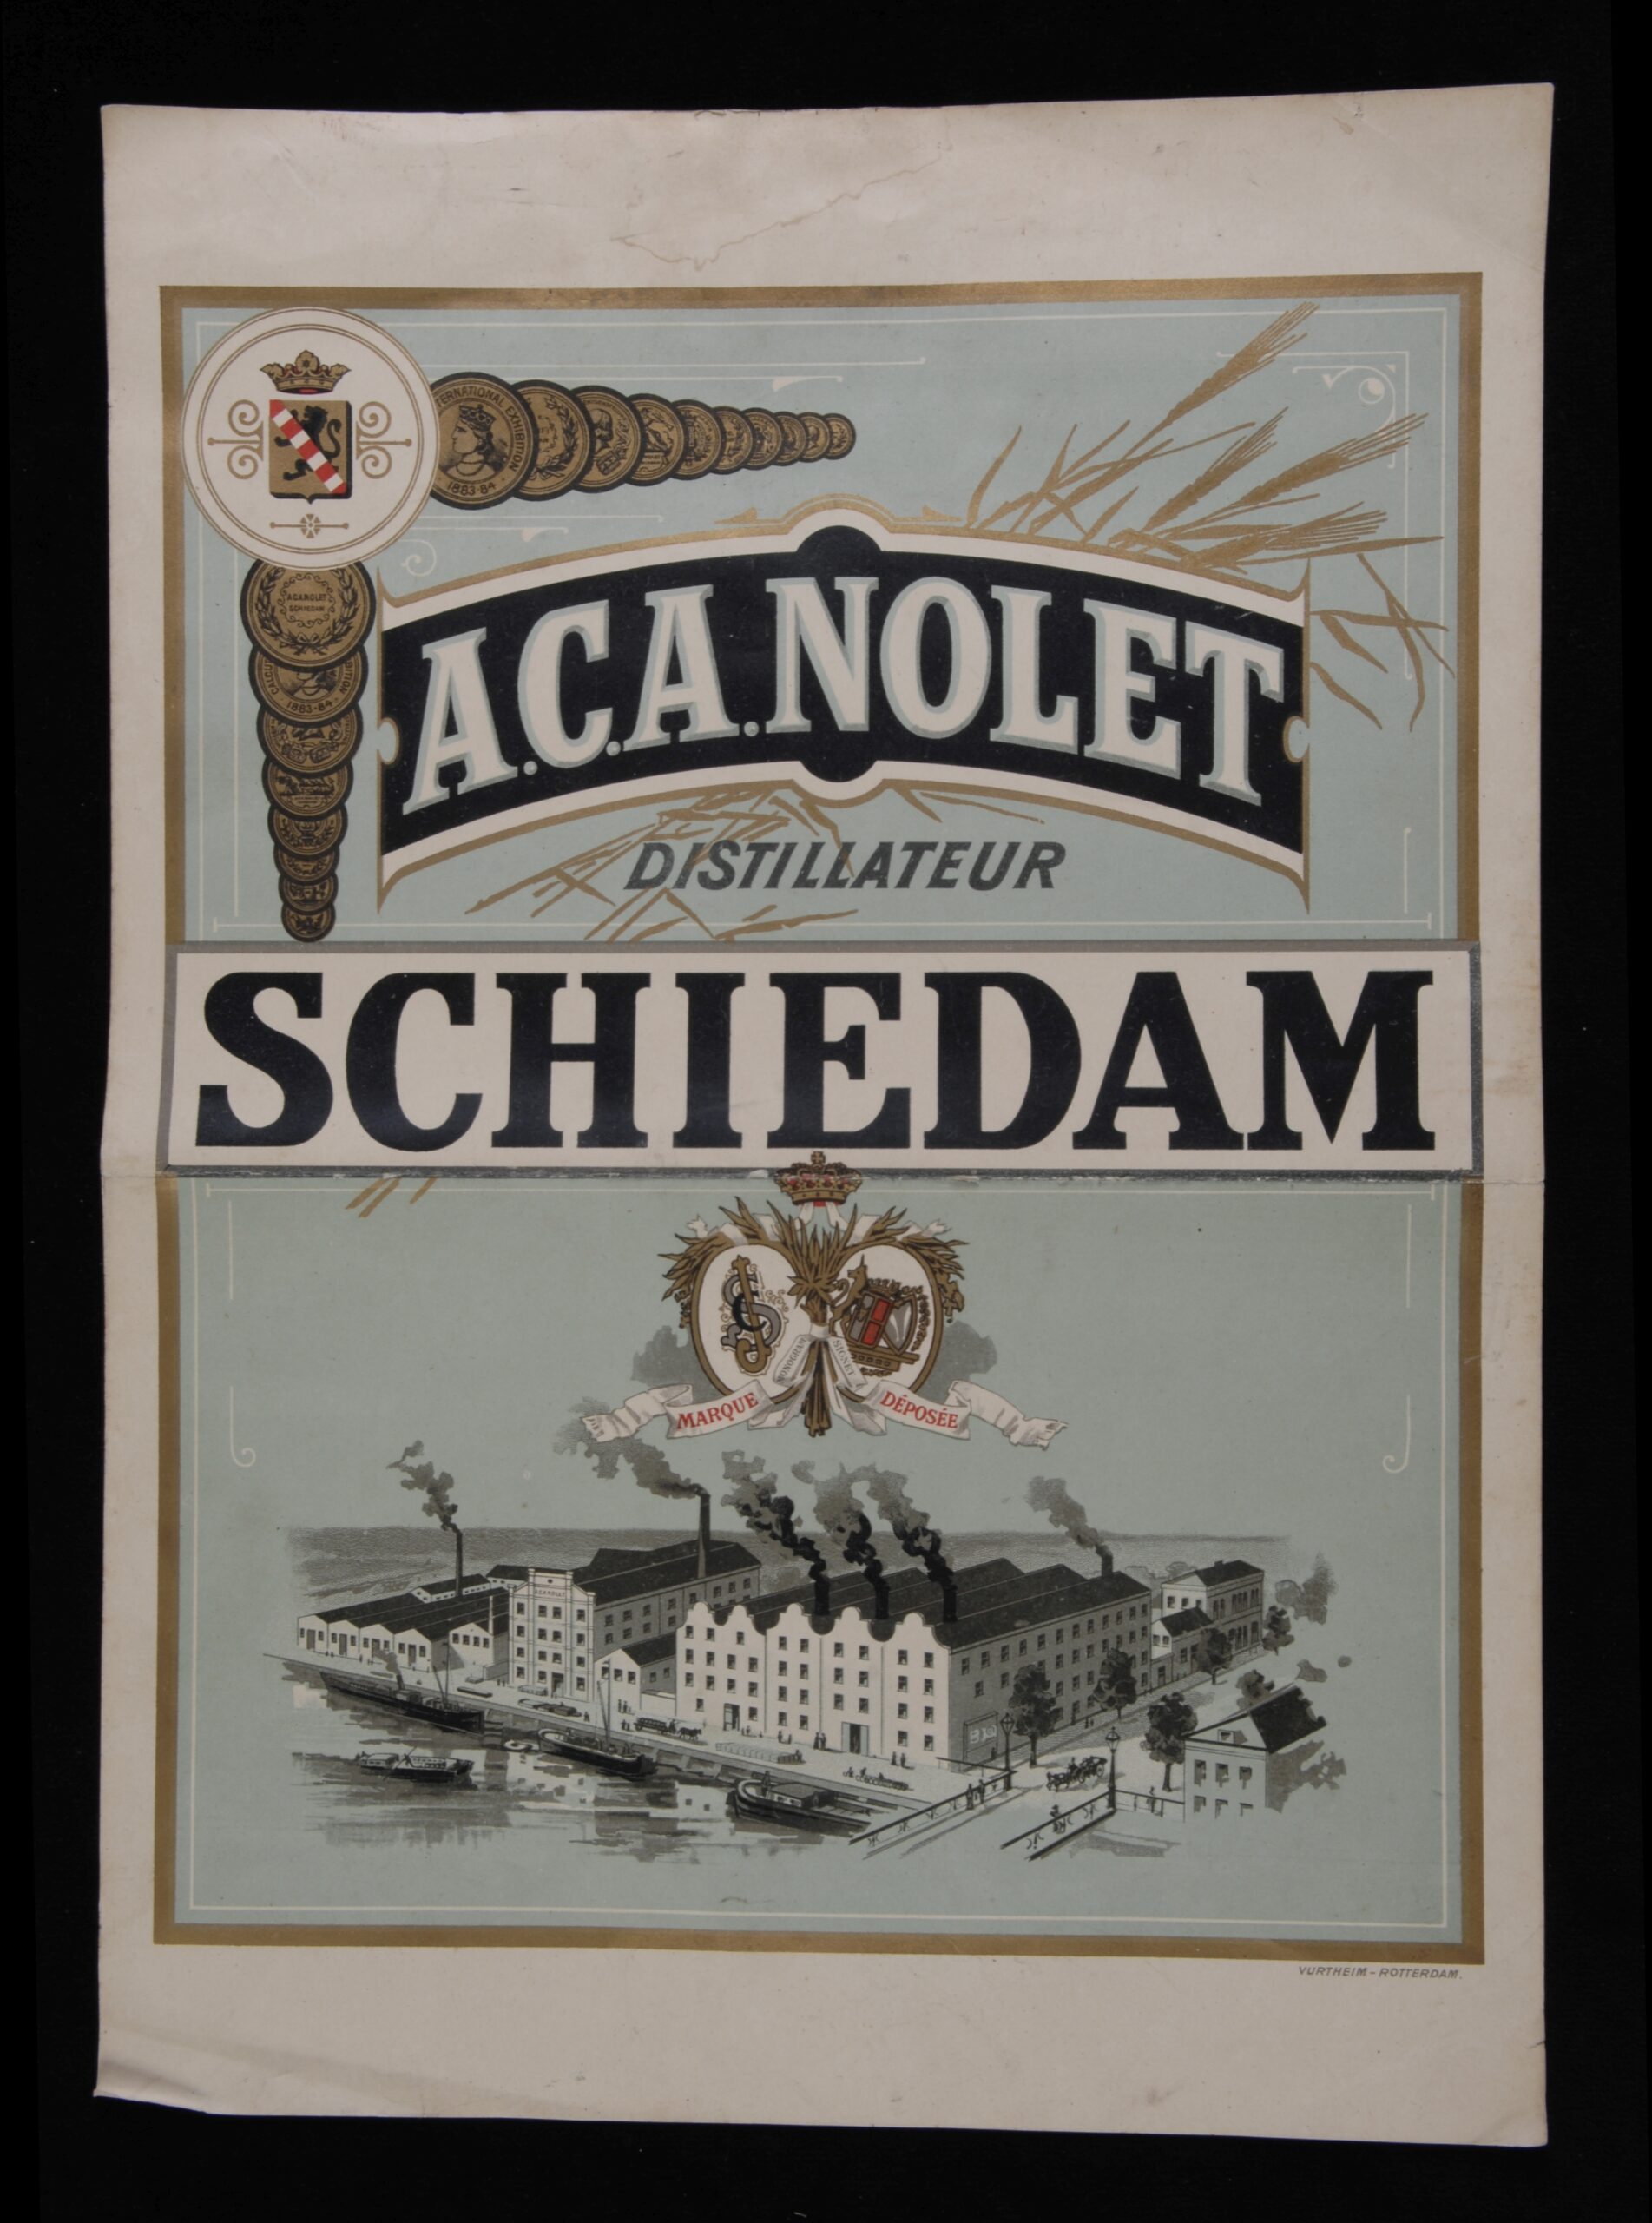 Affiche van A.C.A. Nolet, distillateur te Schiedam